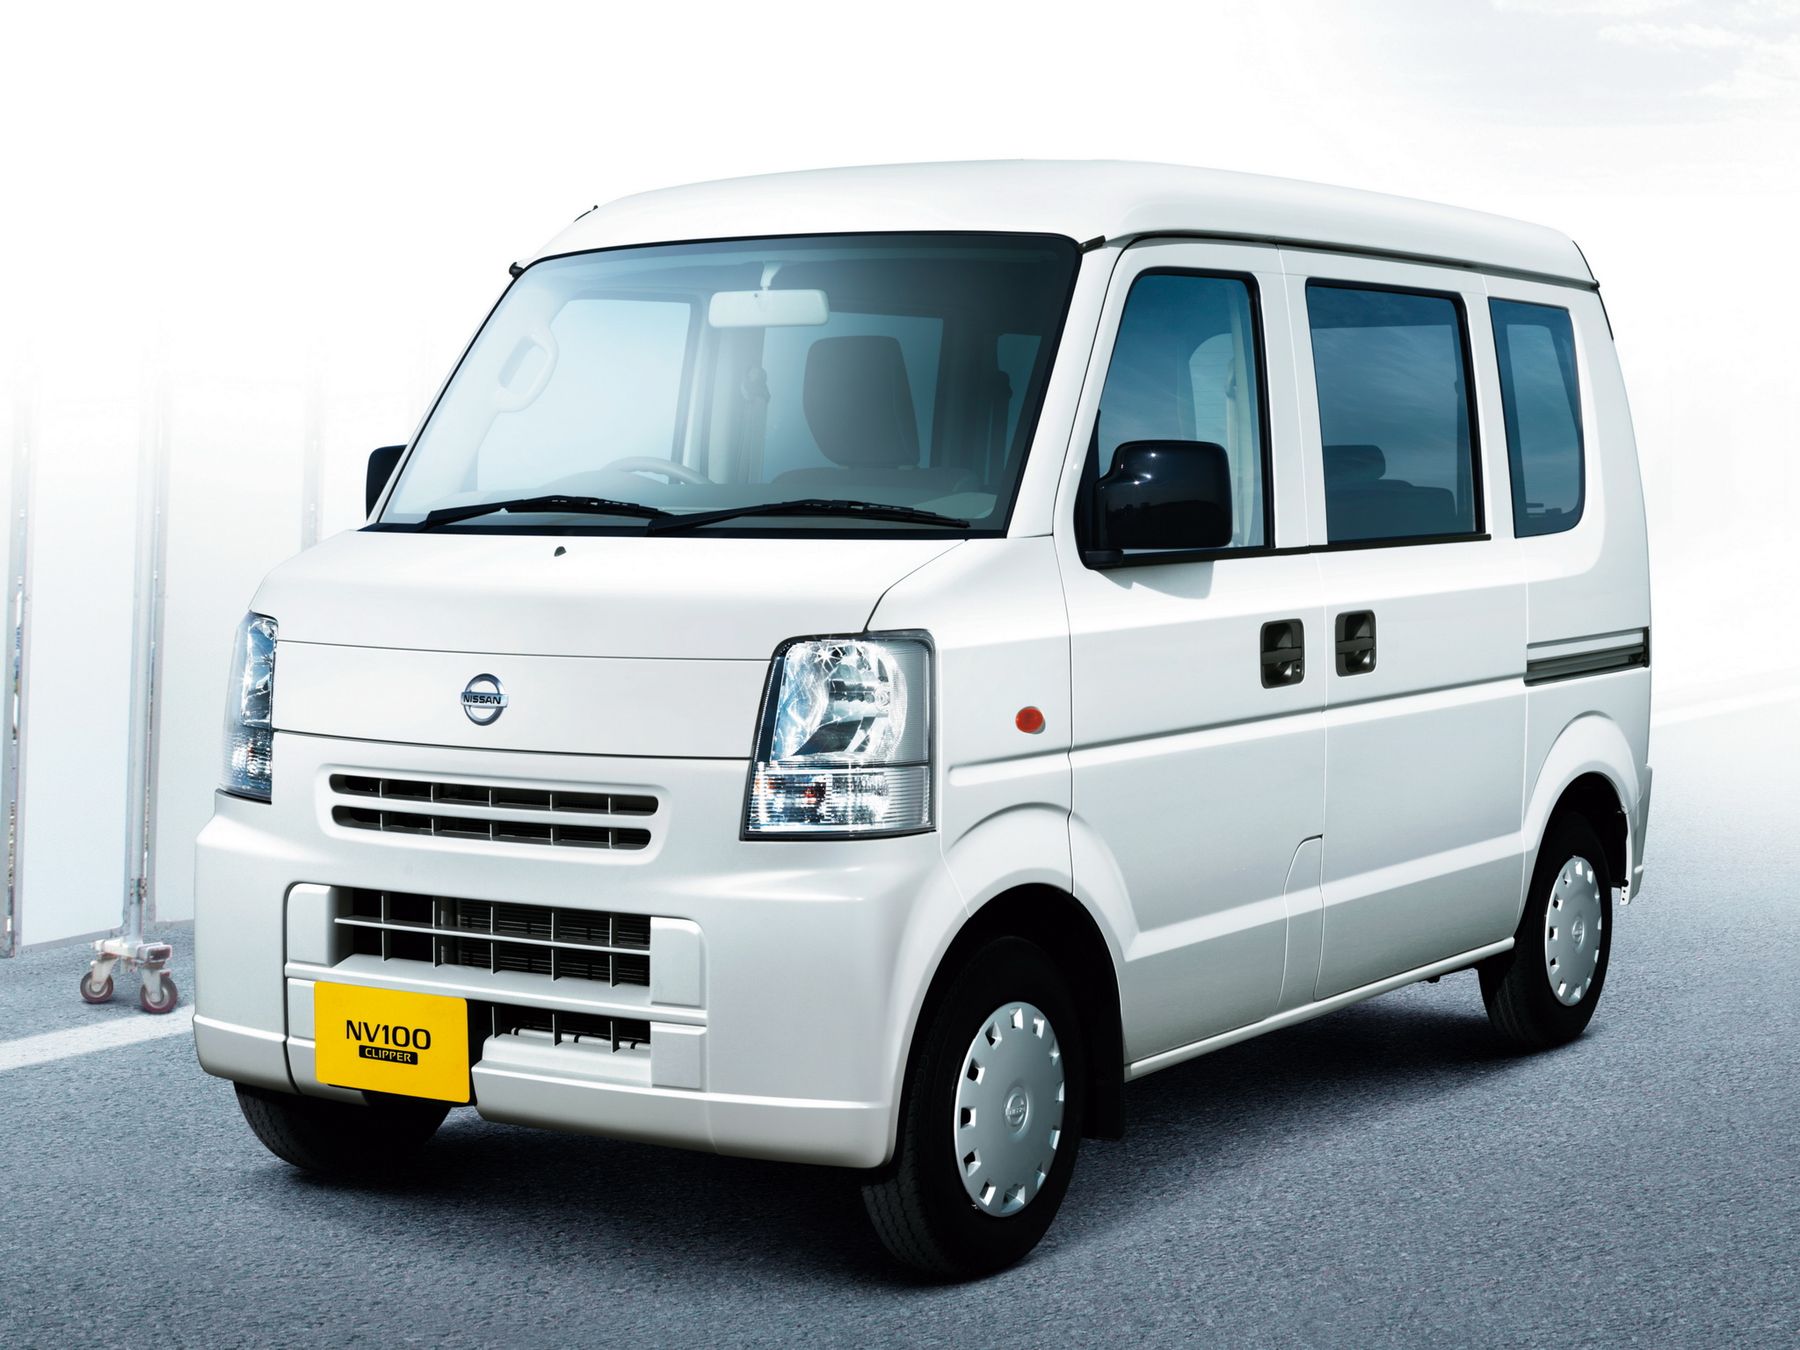 Nissan NV100 Clipper microvan 0.7 MT gasoline | 49 hp rear-wheel